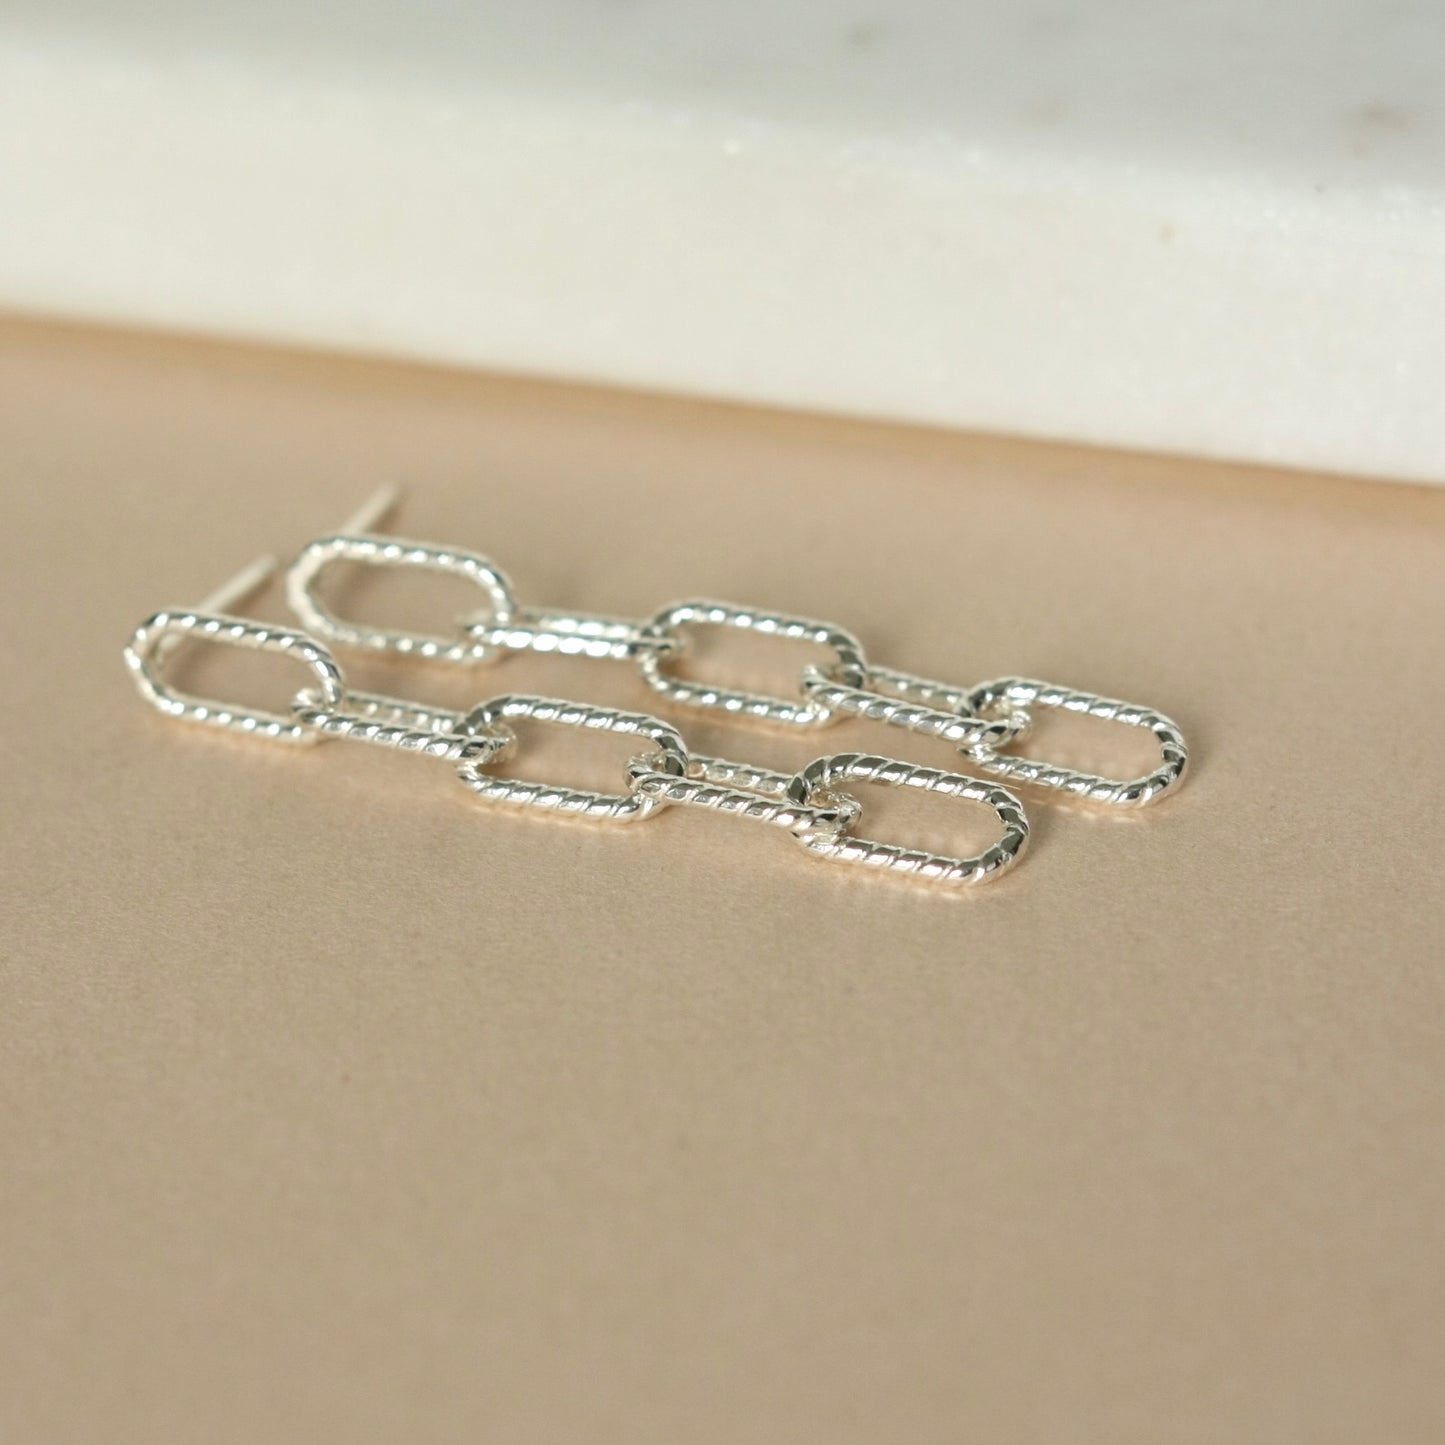 Sterling Silver Paper Clip Chain Earrings